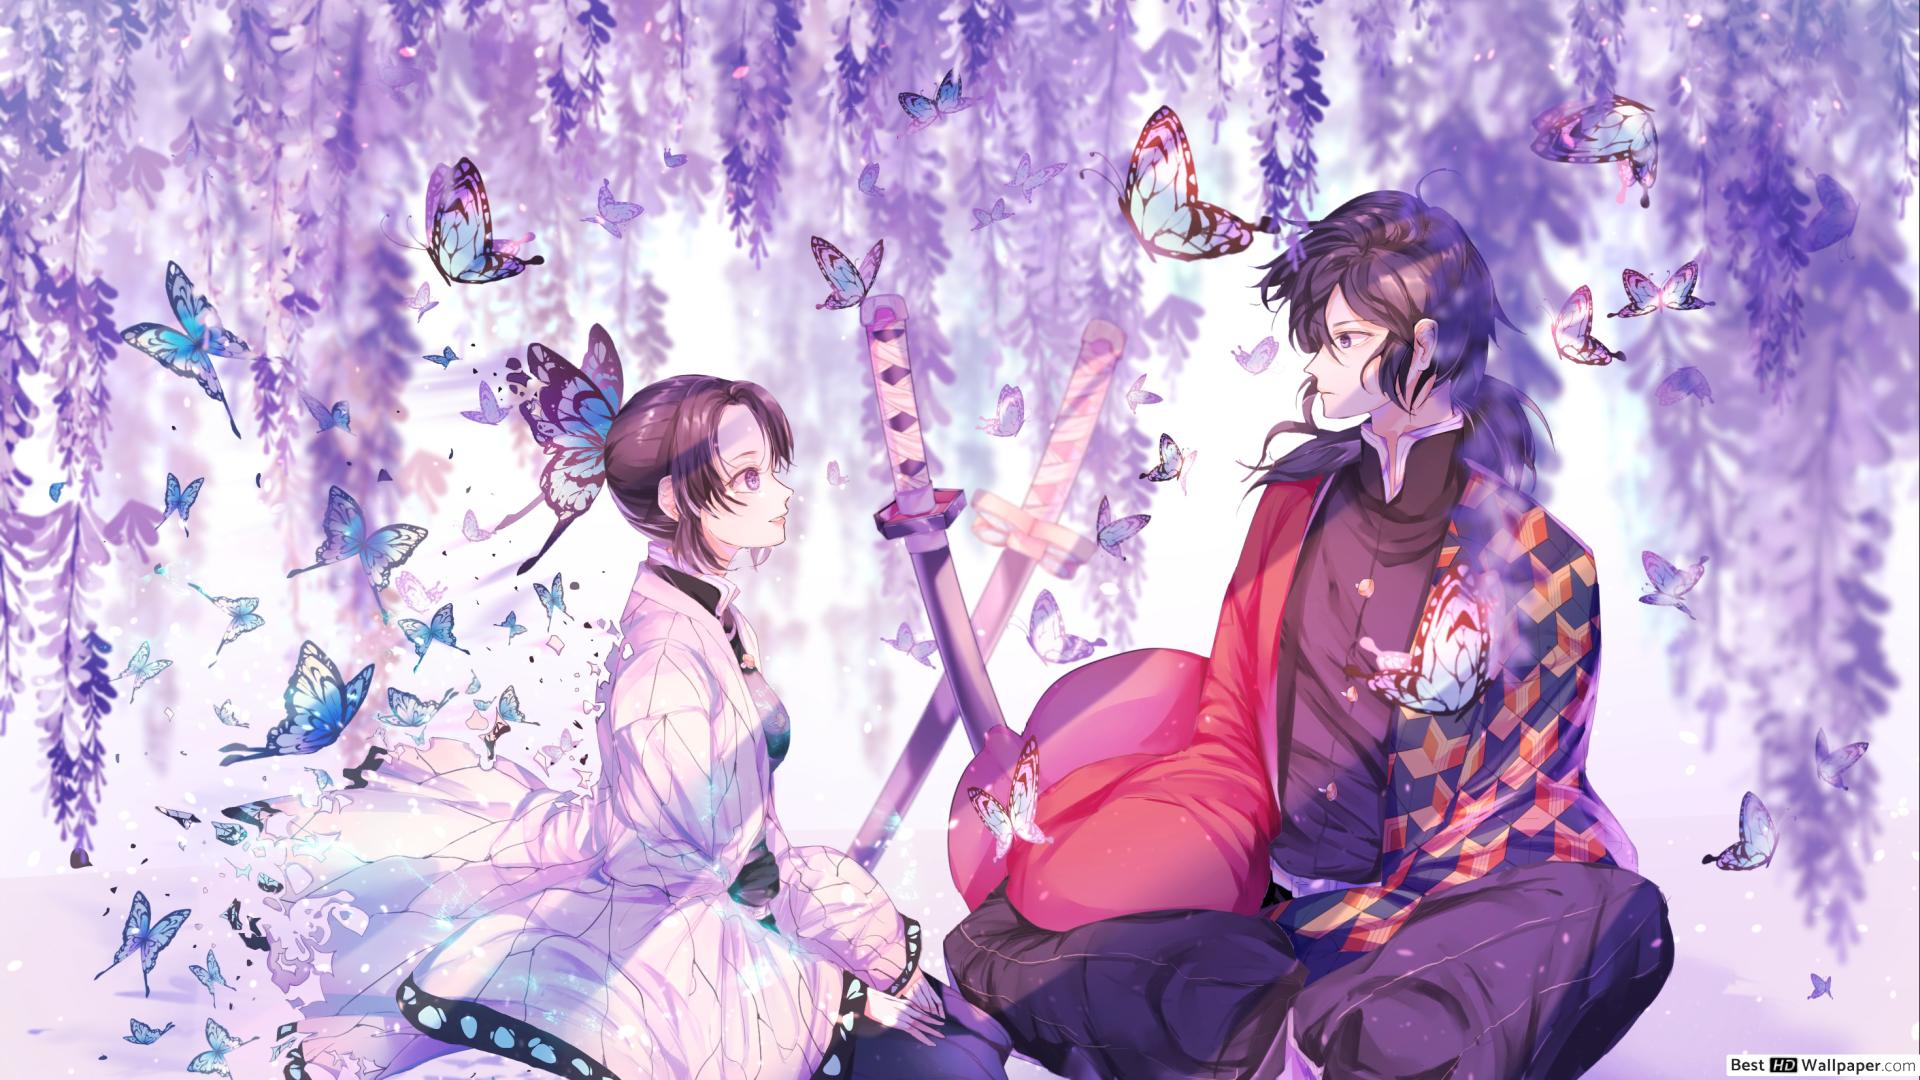 Hashira's Shinobu and Giyu with purple Wisteria and butterflies